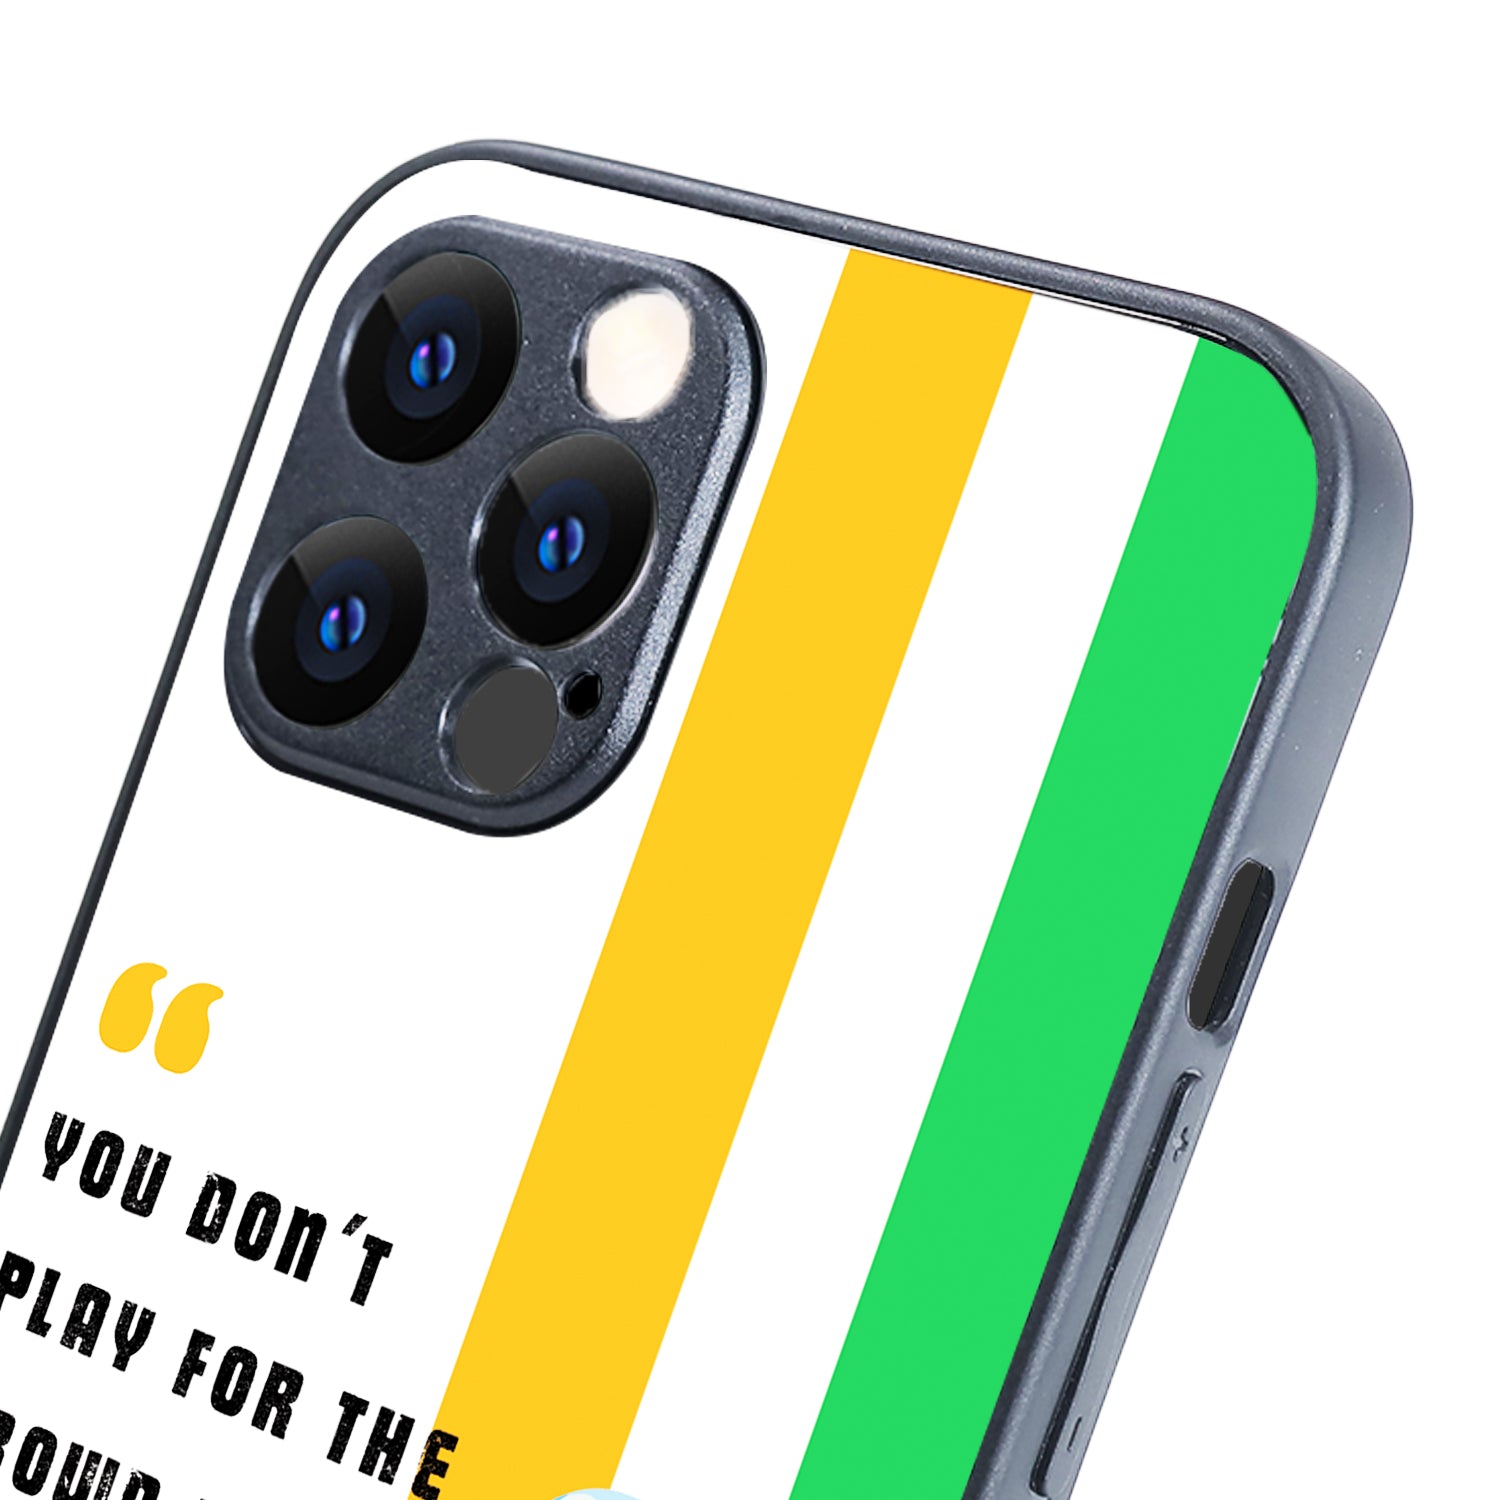 Dhoni Sports iPhone 12 Pro Max Case